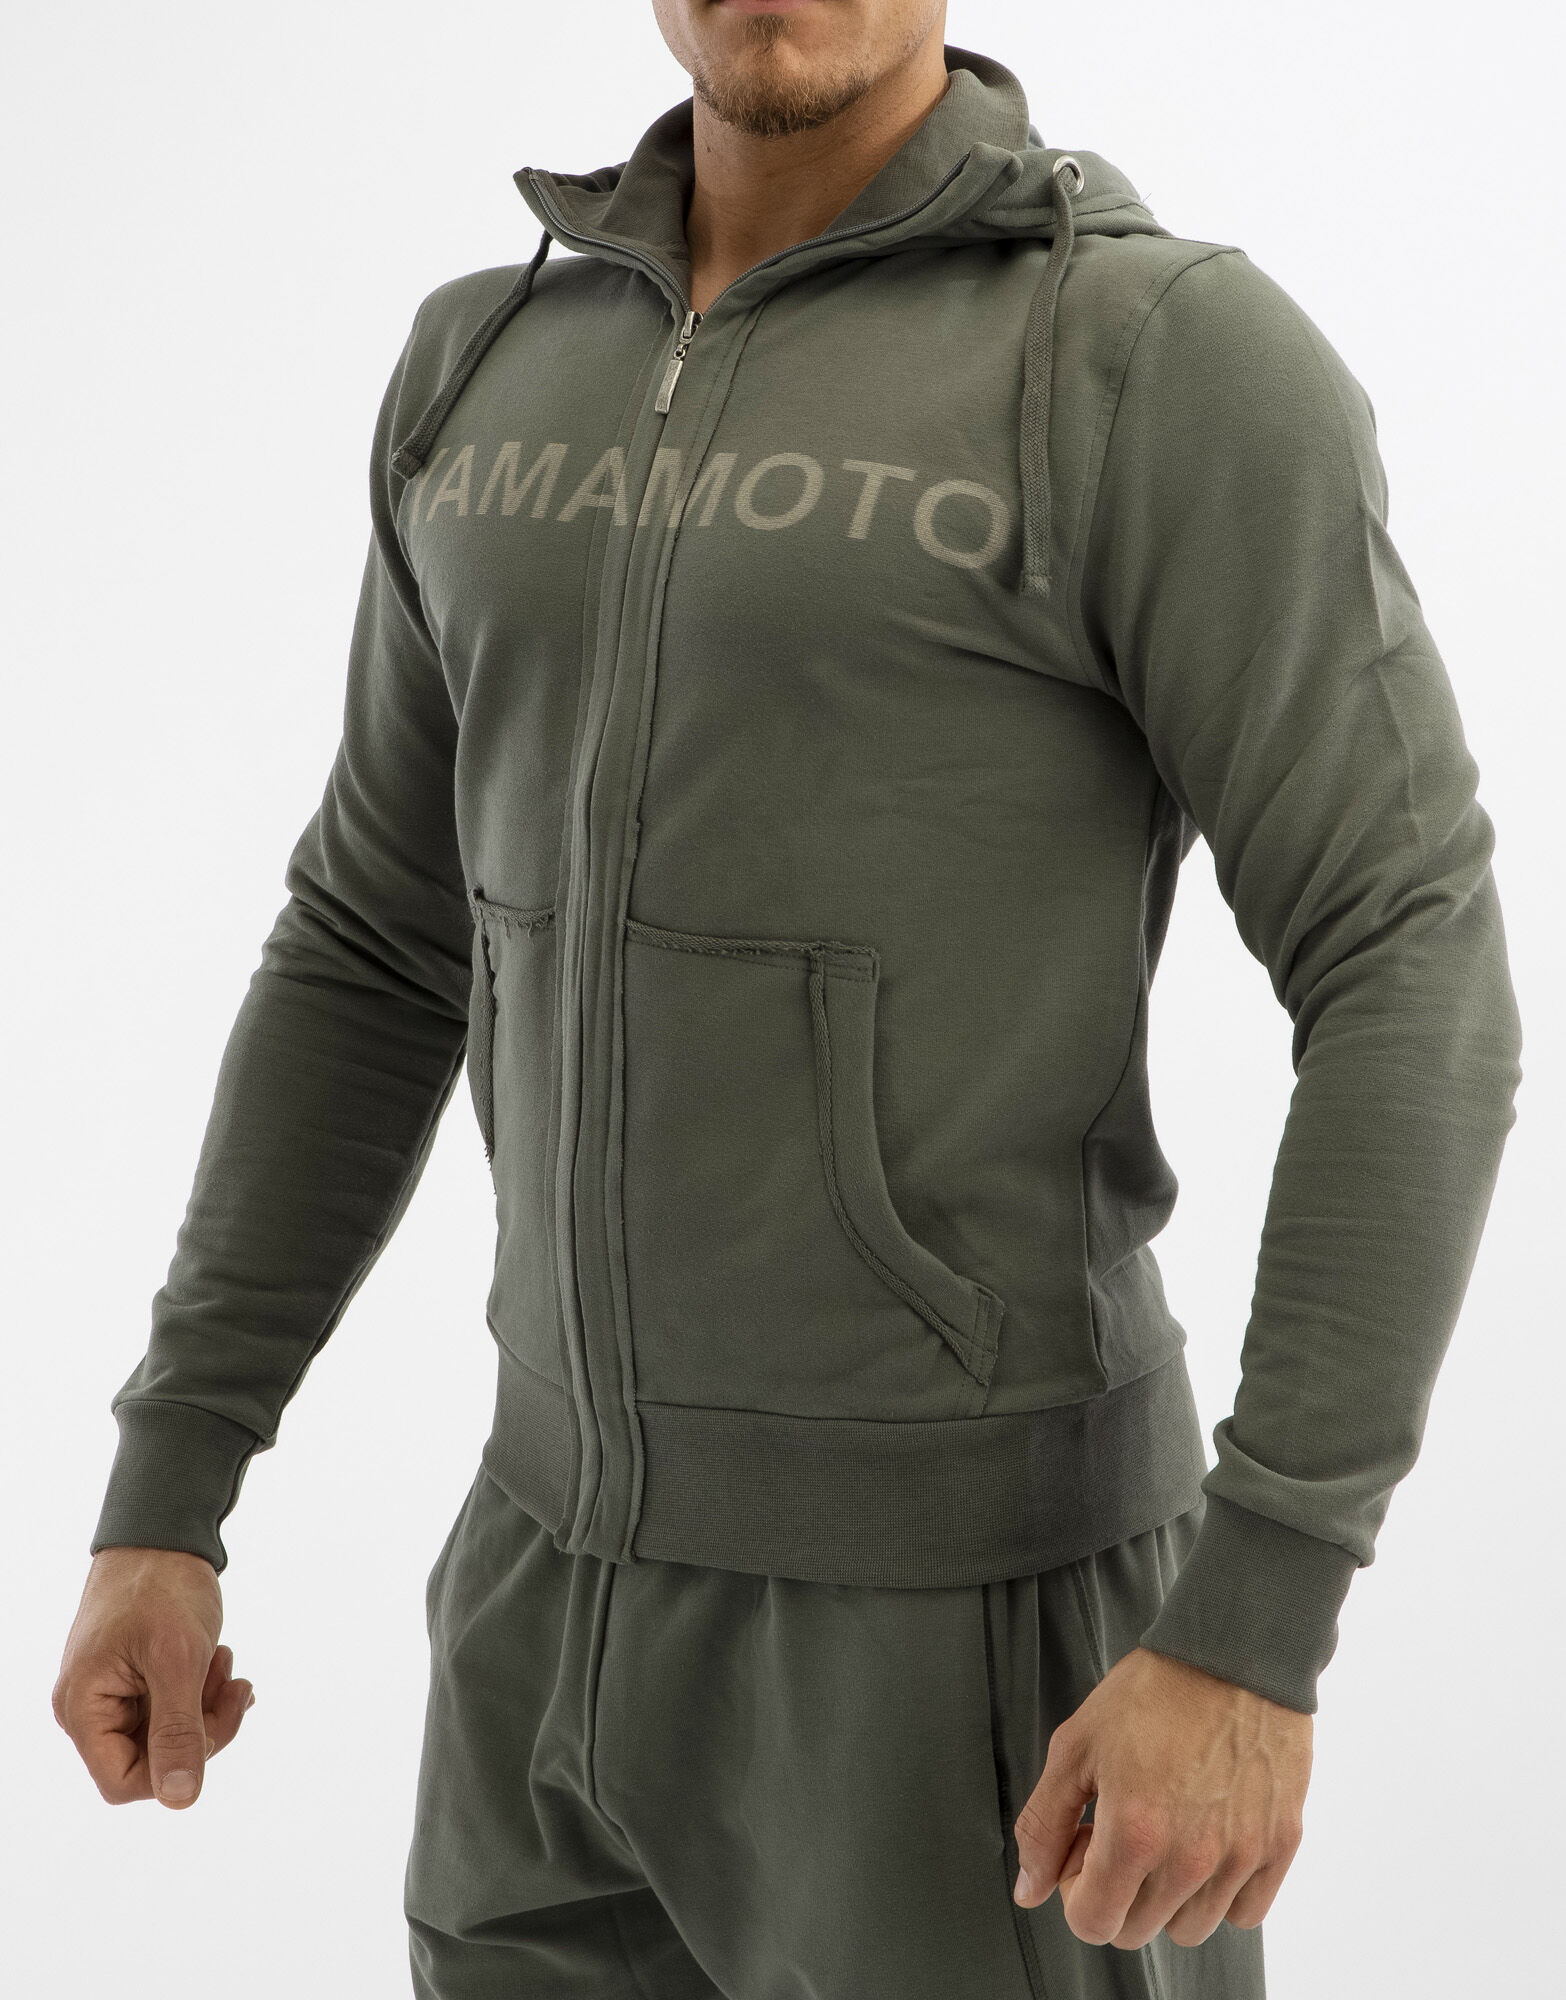 YAMAMOTO OUTFIT Sweatshirt Zip Colore: Grigio Xl